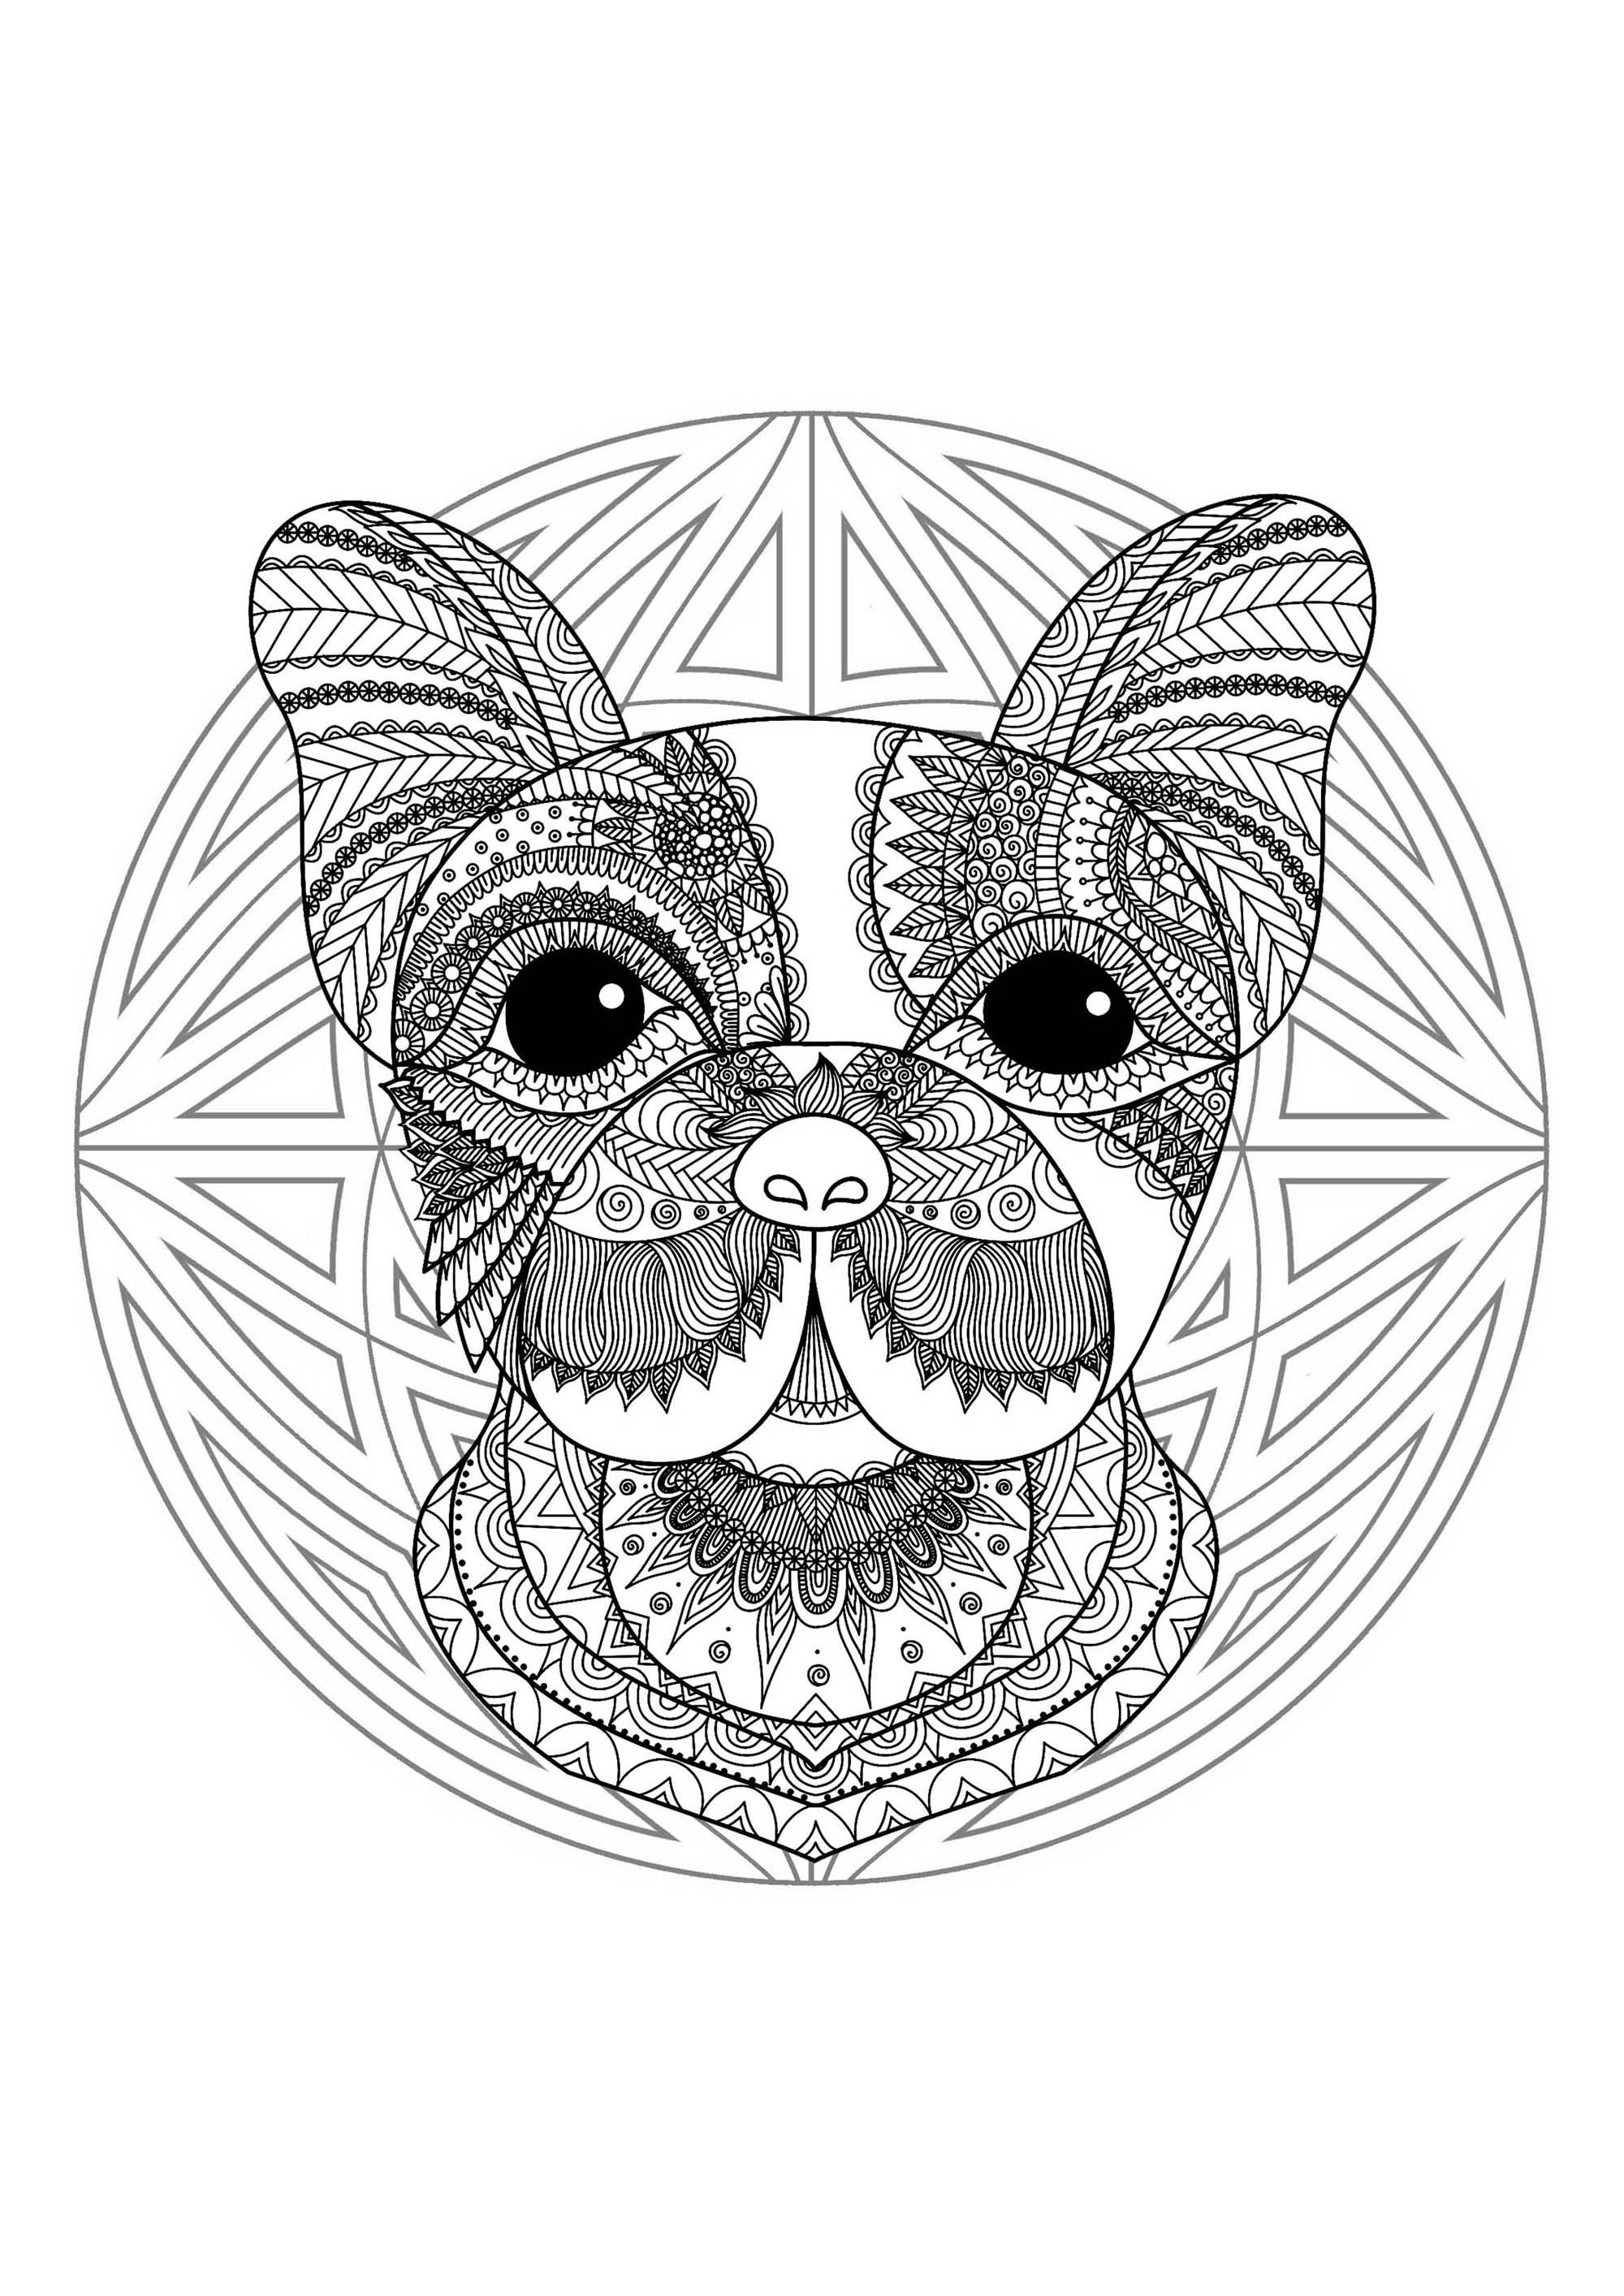 Download Mandala with cute Dog head and geometric patterns - M&alas ...